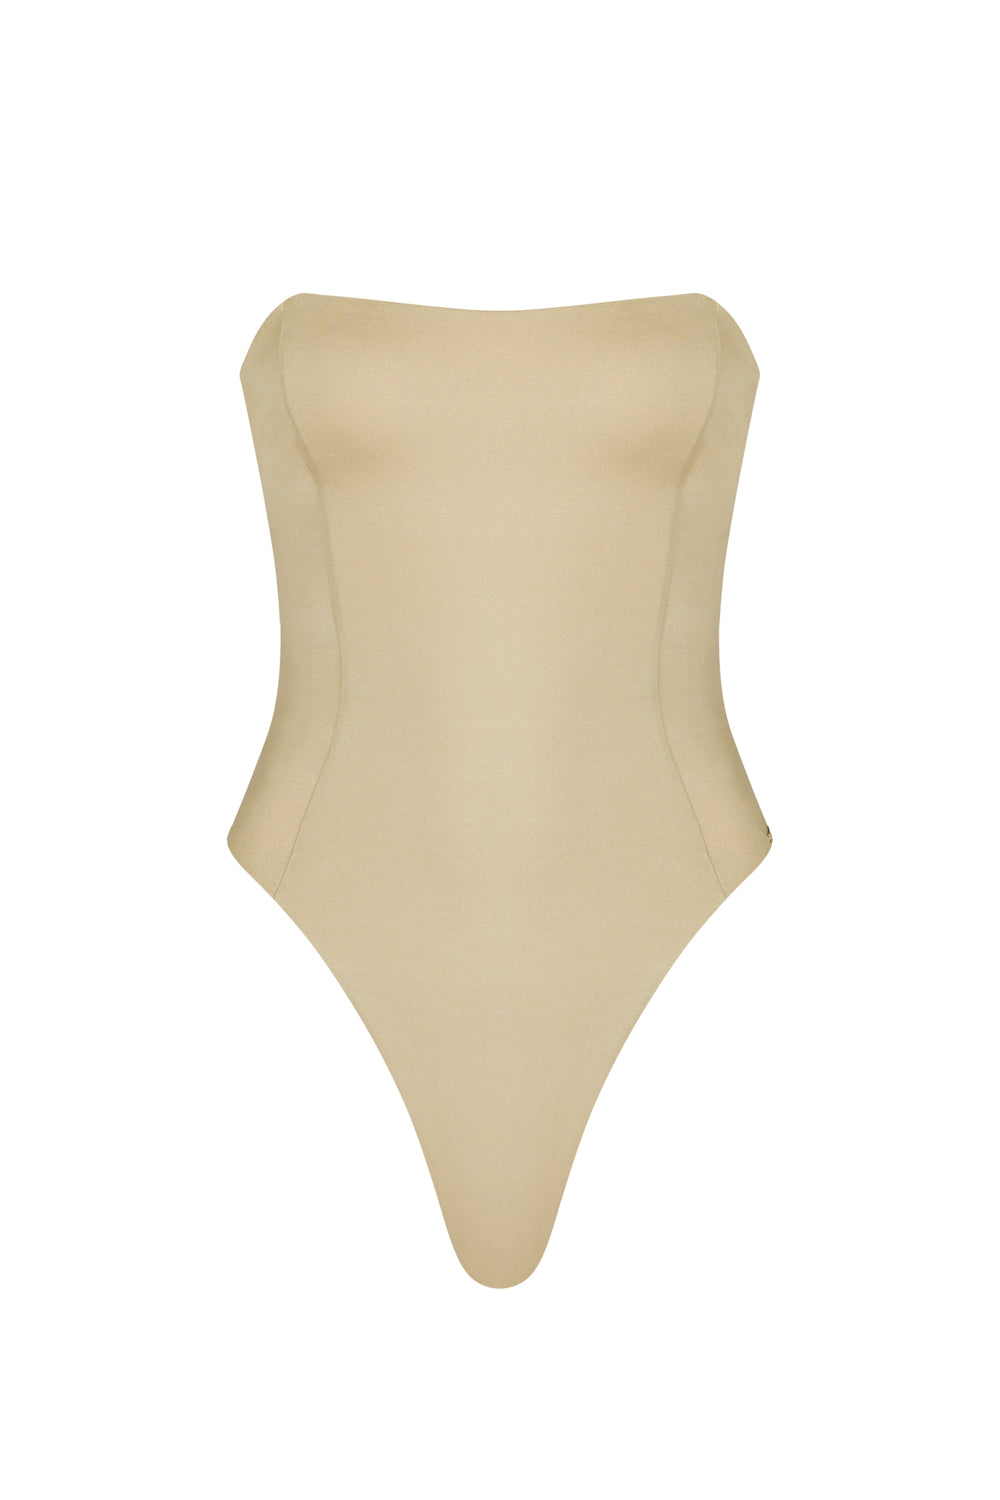 flook the label ella bendau swimsuit swimwear gold product image front